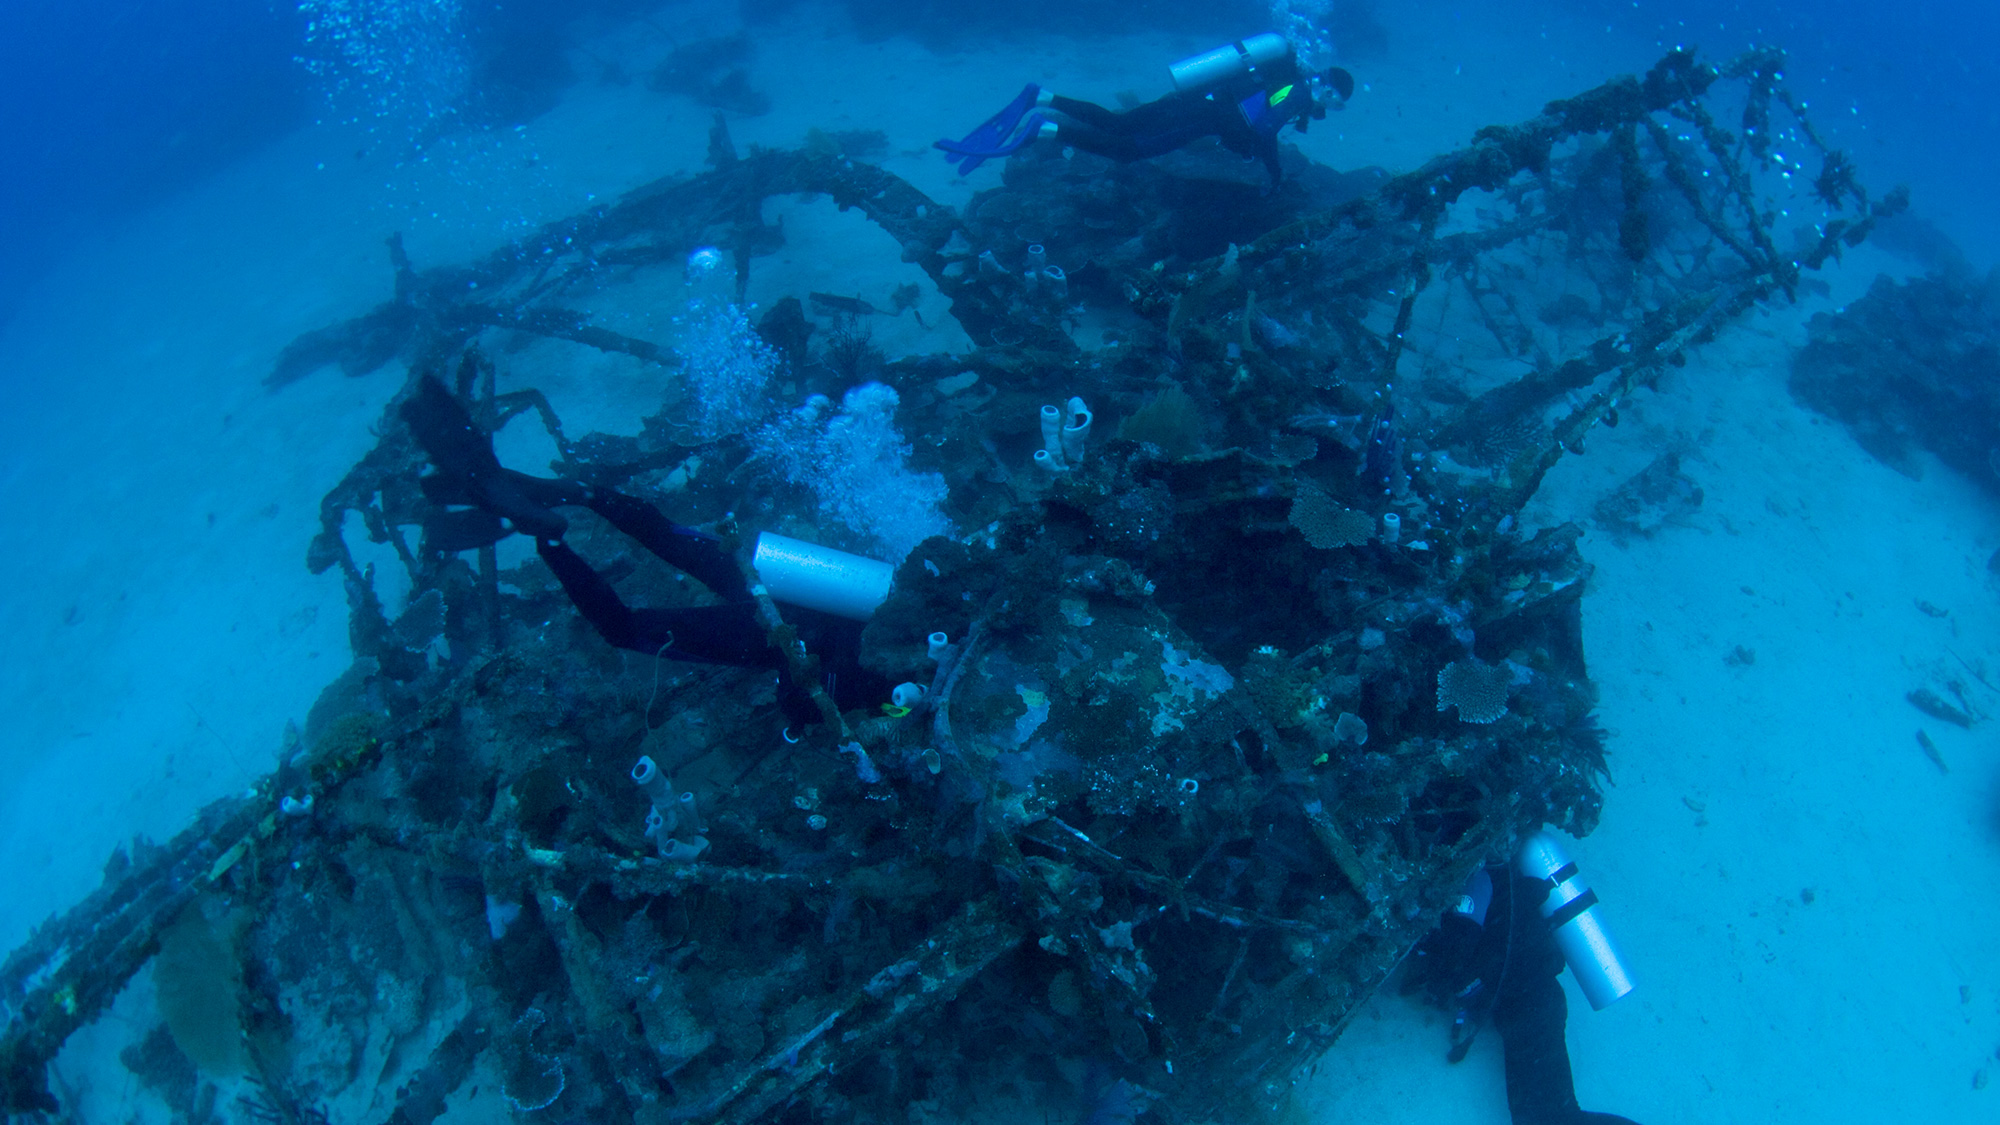 Scuba divers surveying the Johnson family’s sunken Carnauba airplane.